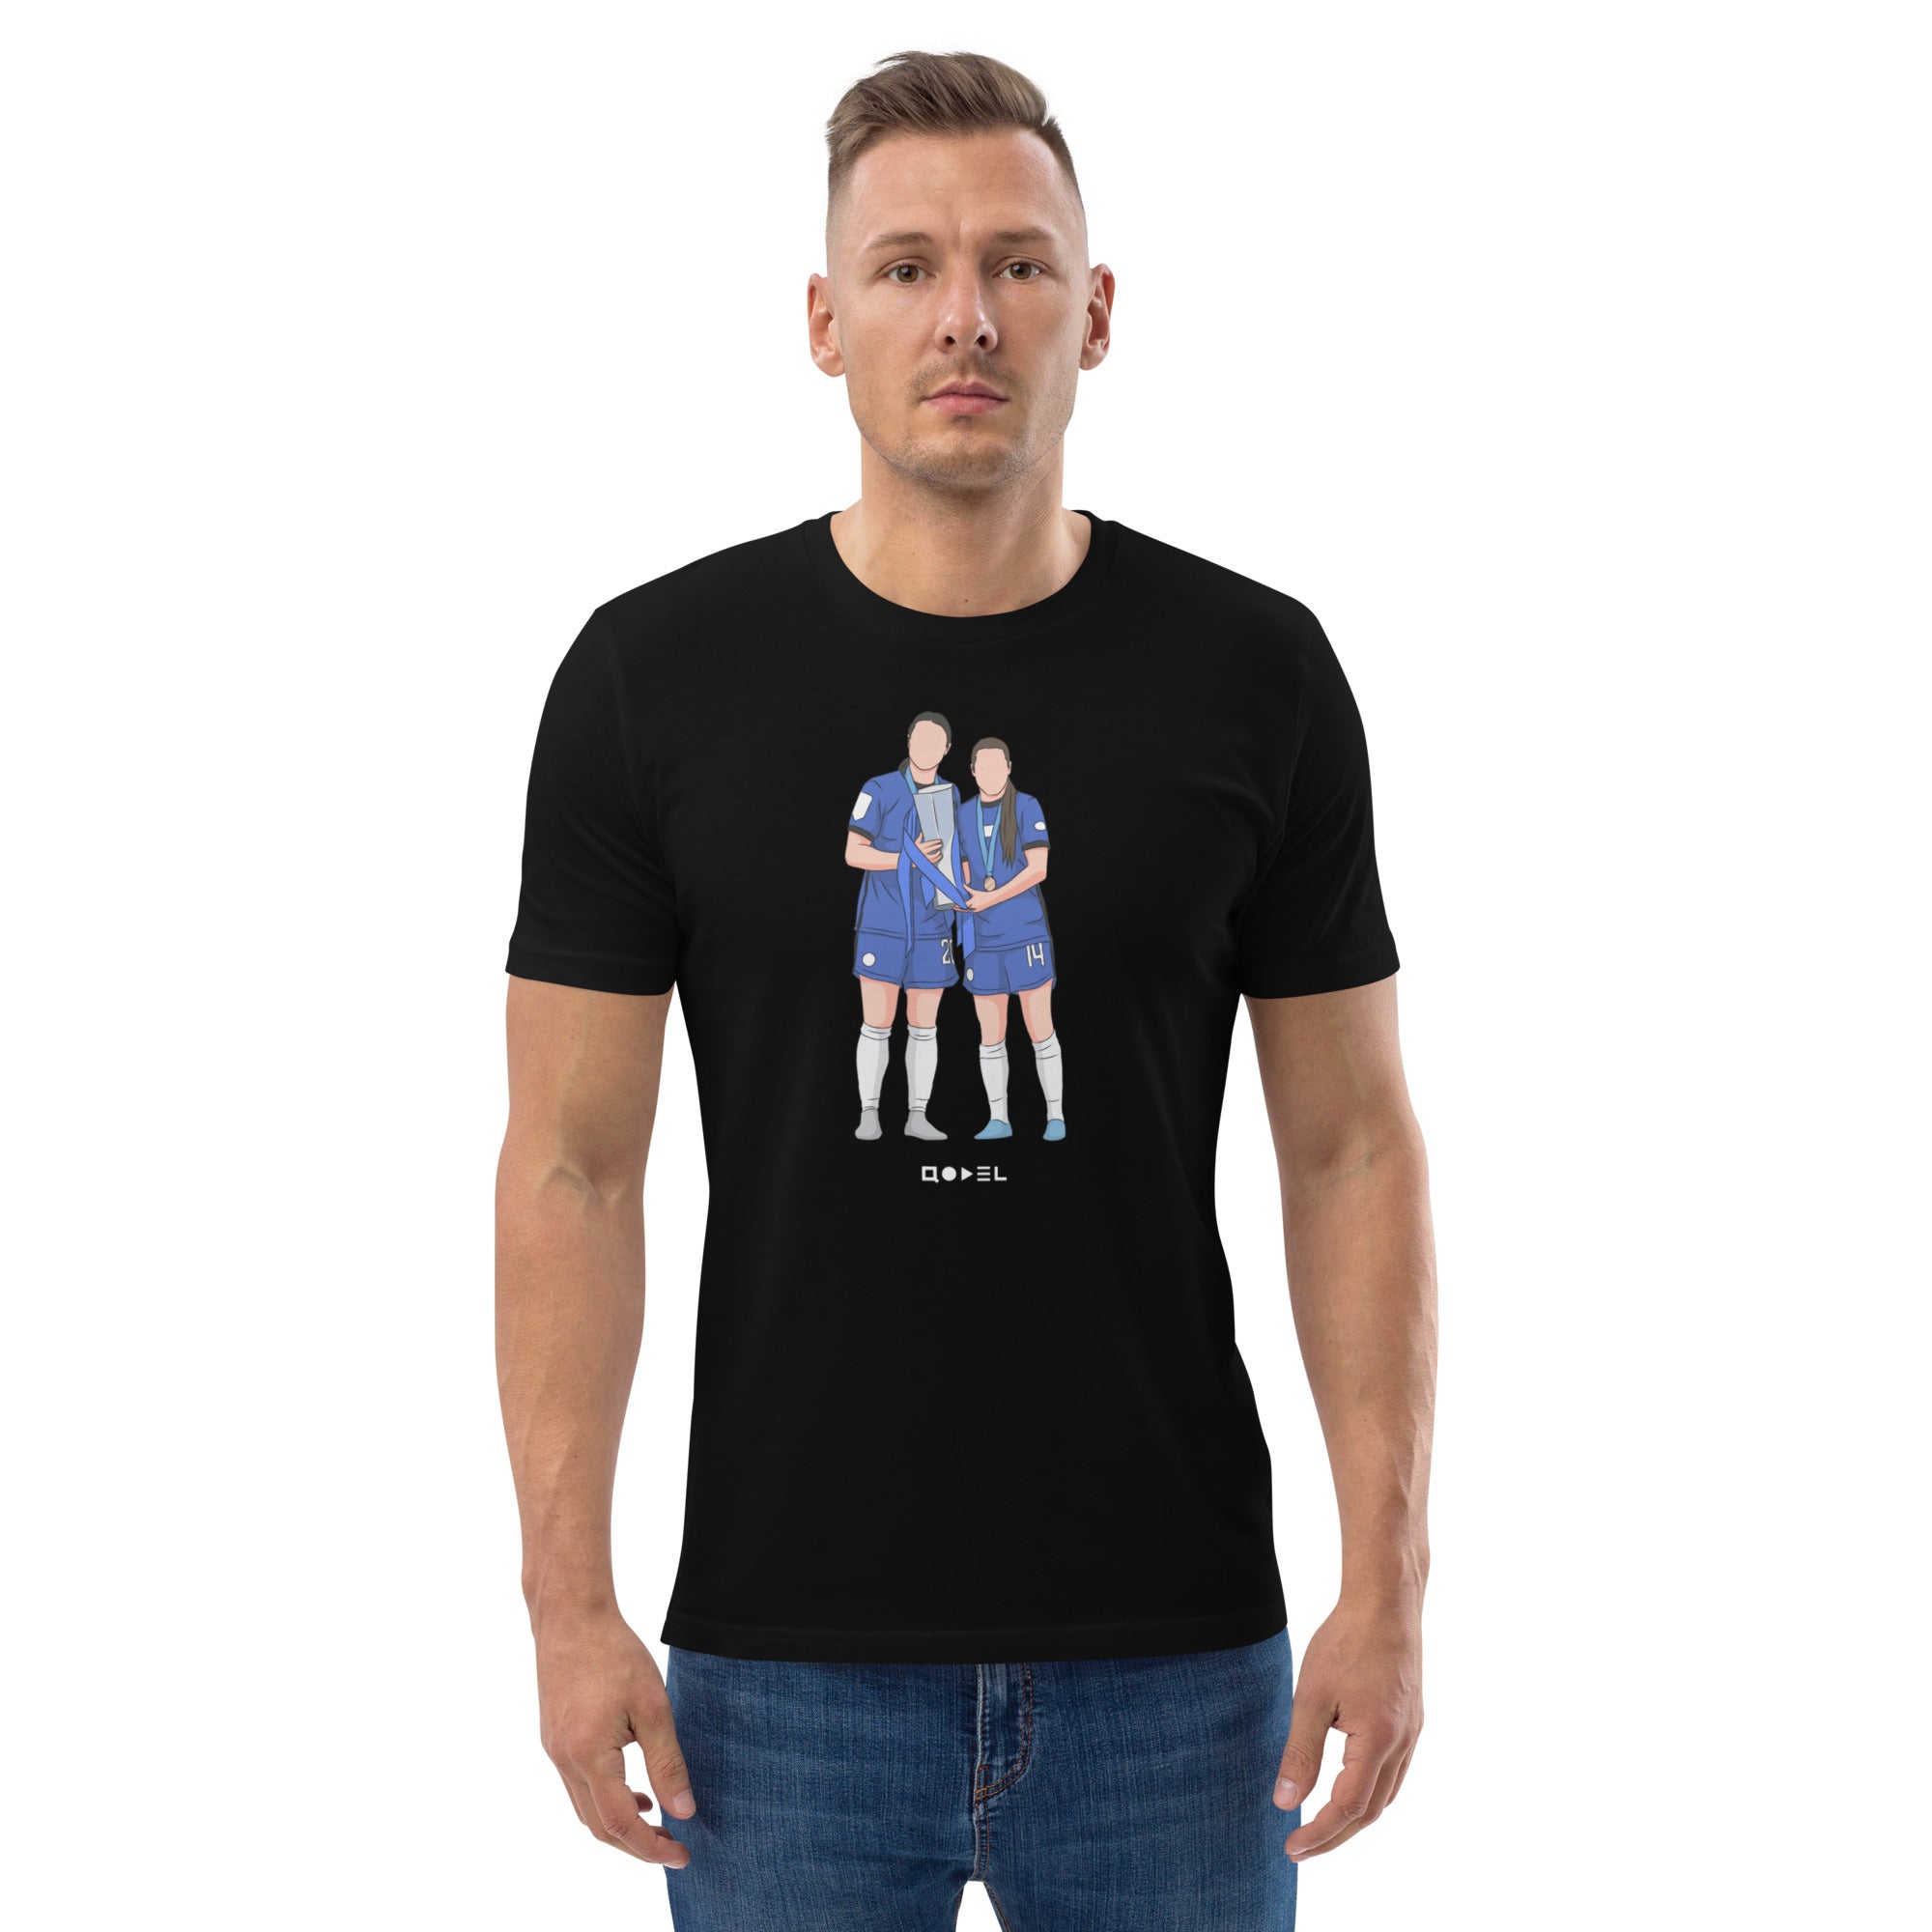 Sam Kerr and Fran Kirby Chelsea T-Shirt